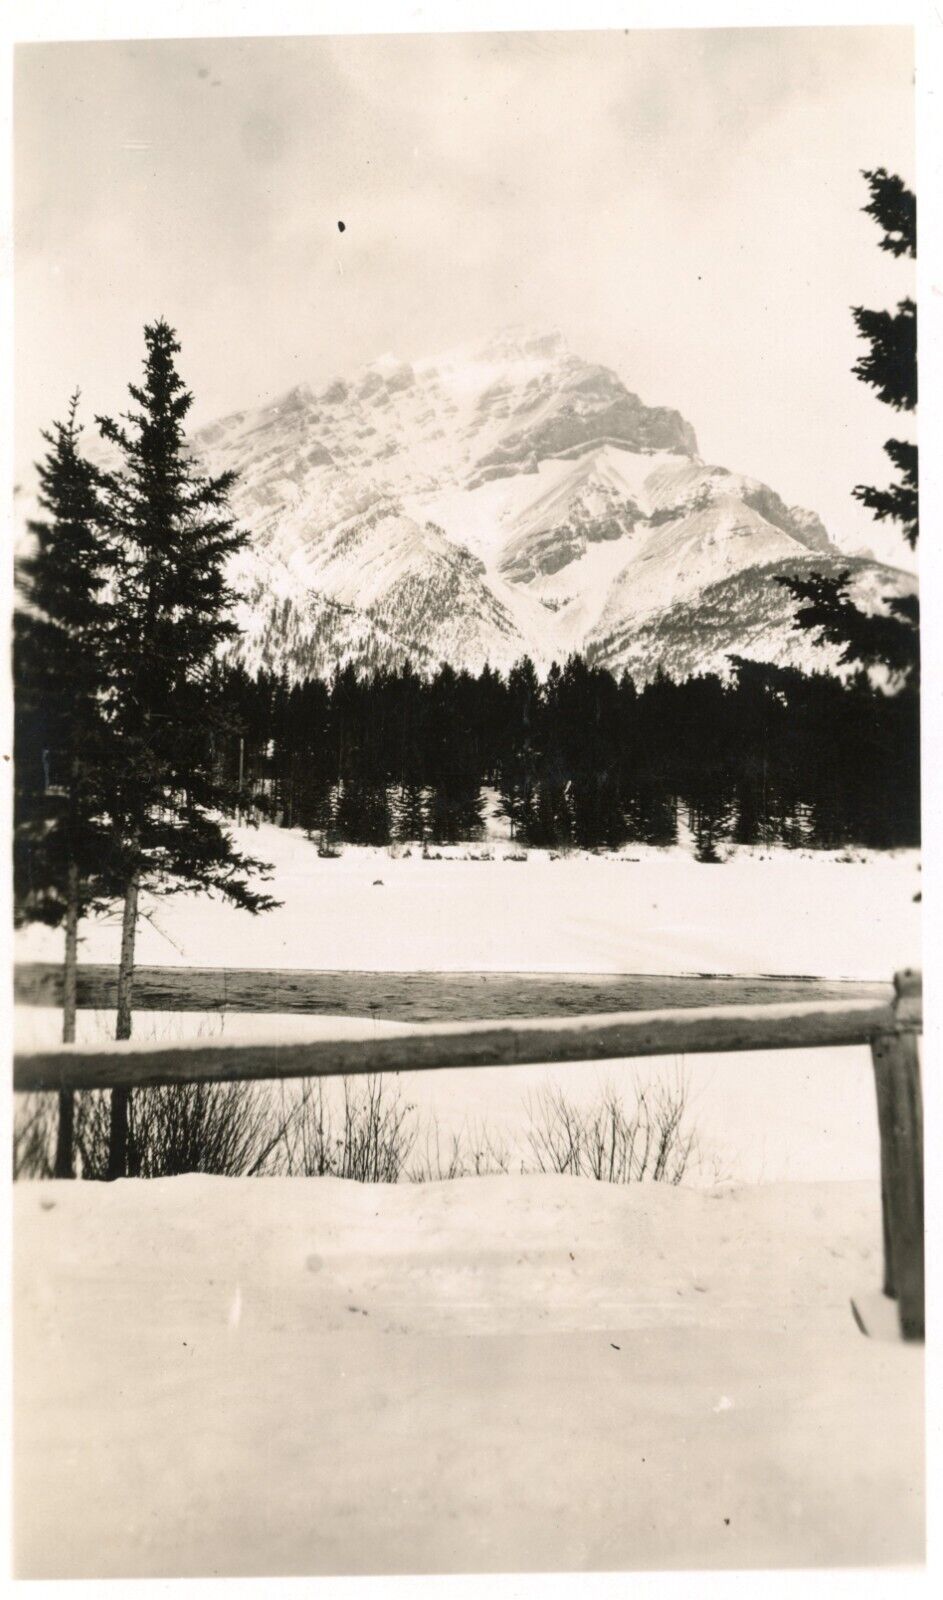 Antique Photo Snow Iron Mountain Banff Alberta Canada Landscape 1920s